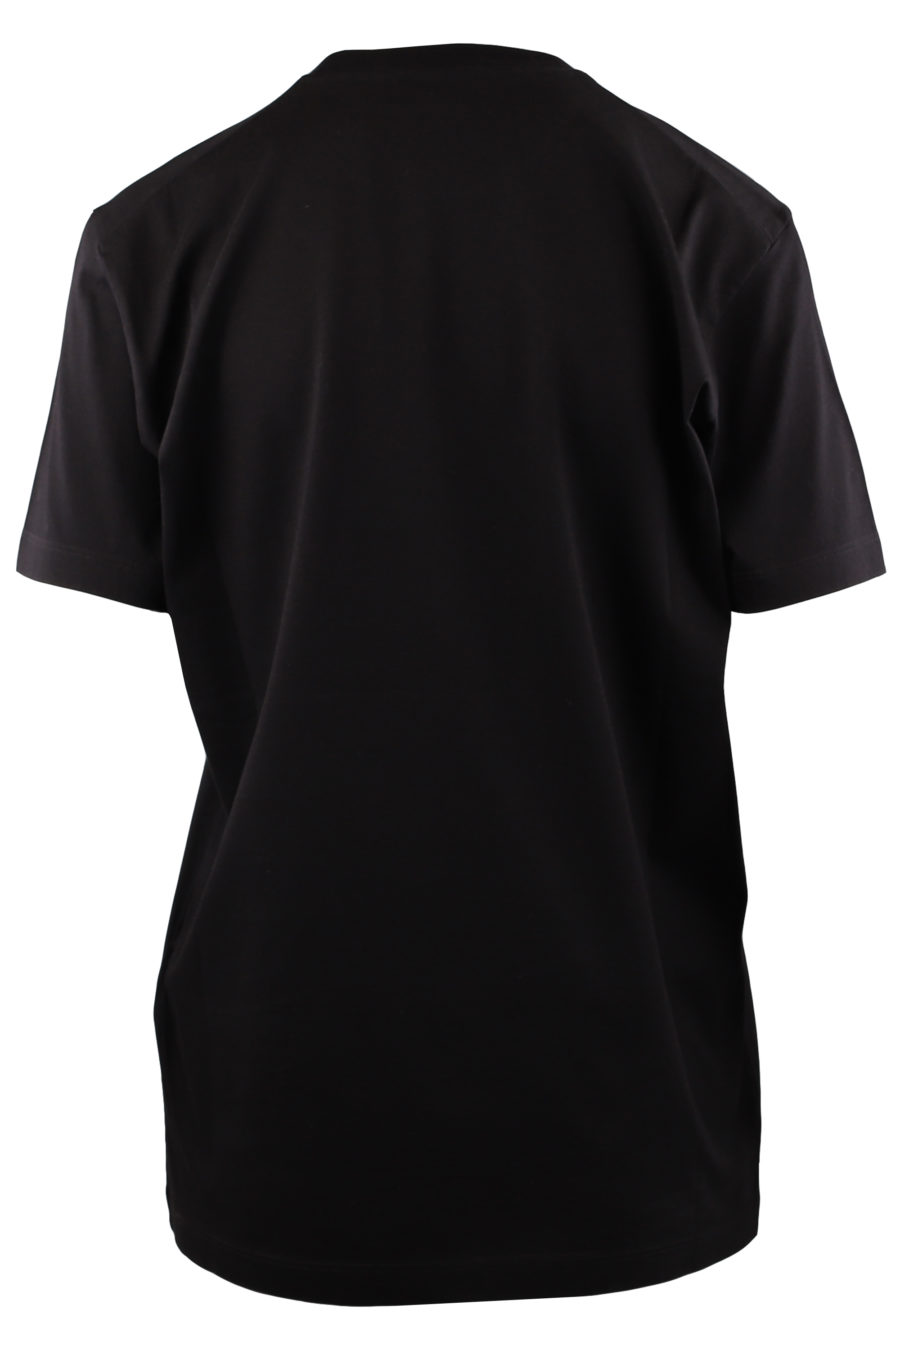 Black T-shirt with "I can't" logo - dc4e2f88c61046b522f2ac030463114e20344010